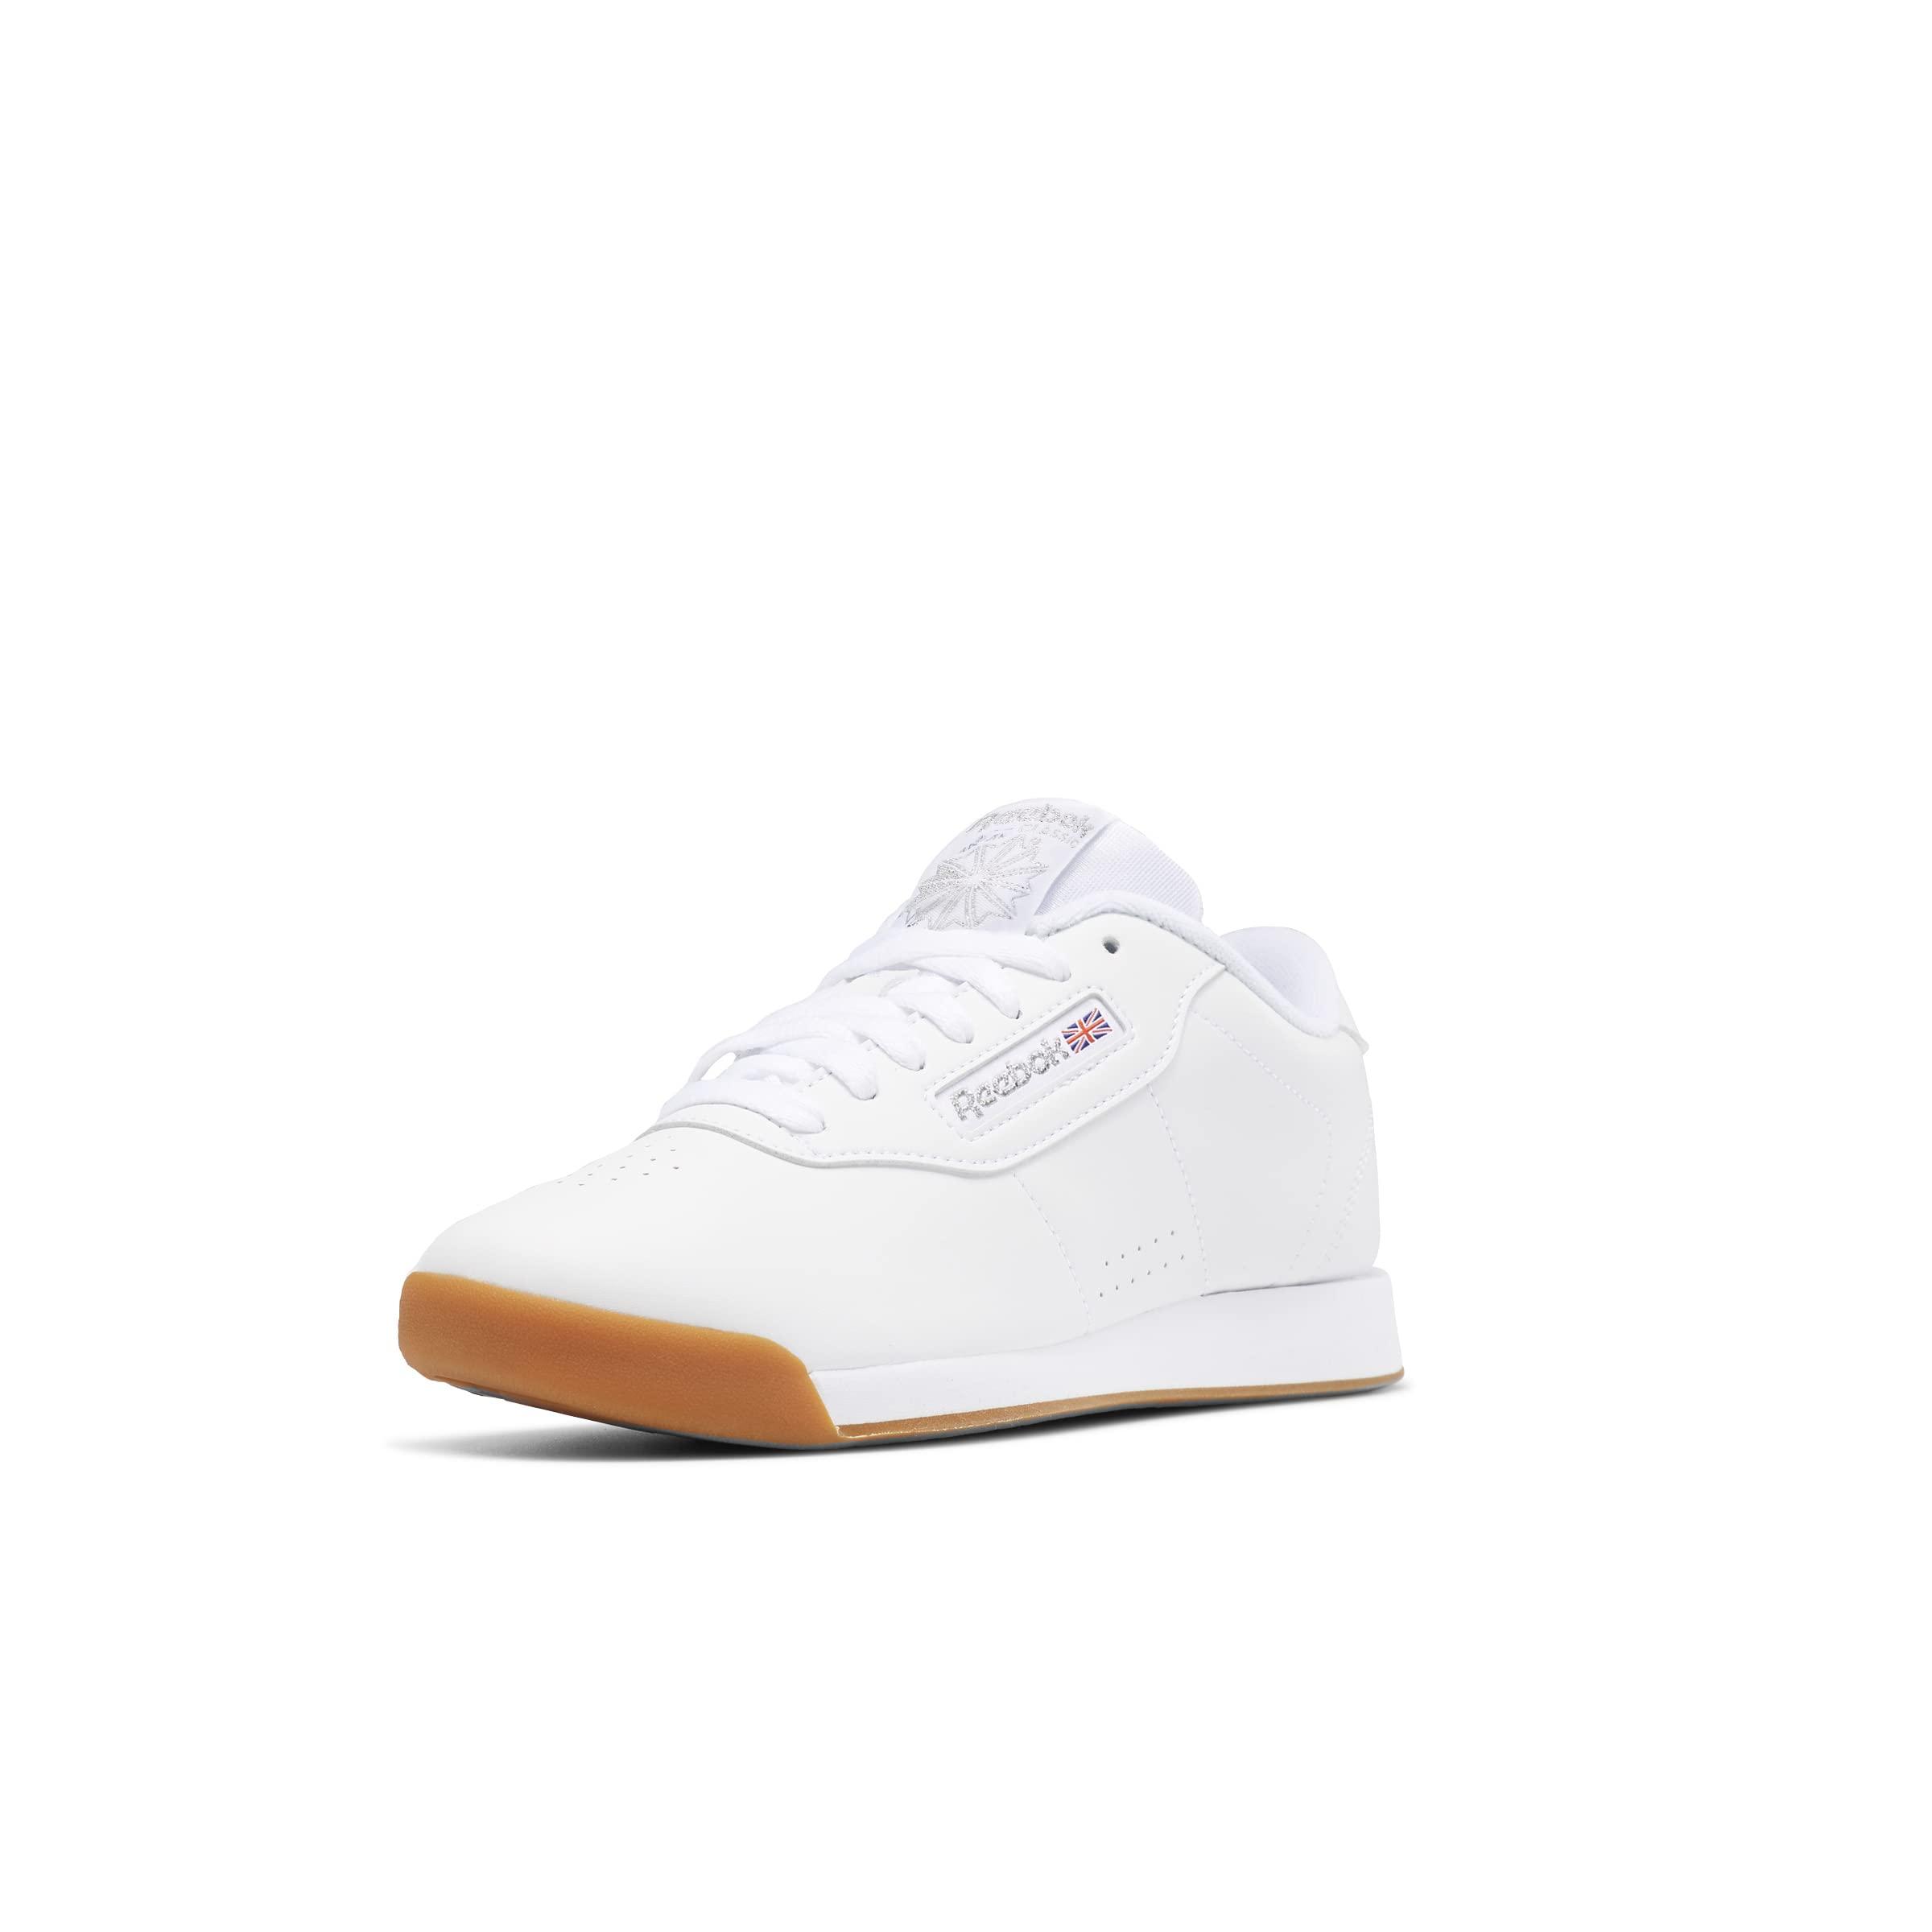 Reebok Princess Wide Fashion Shoes,white/gum | Lyst